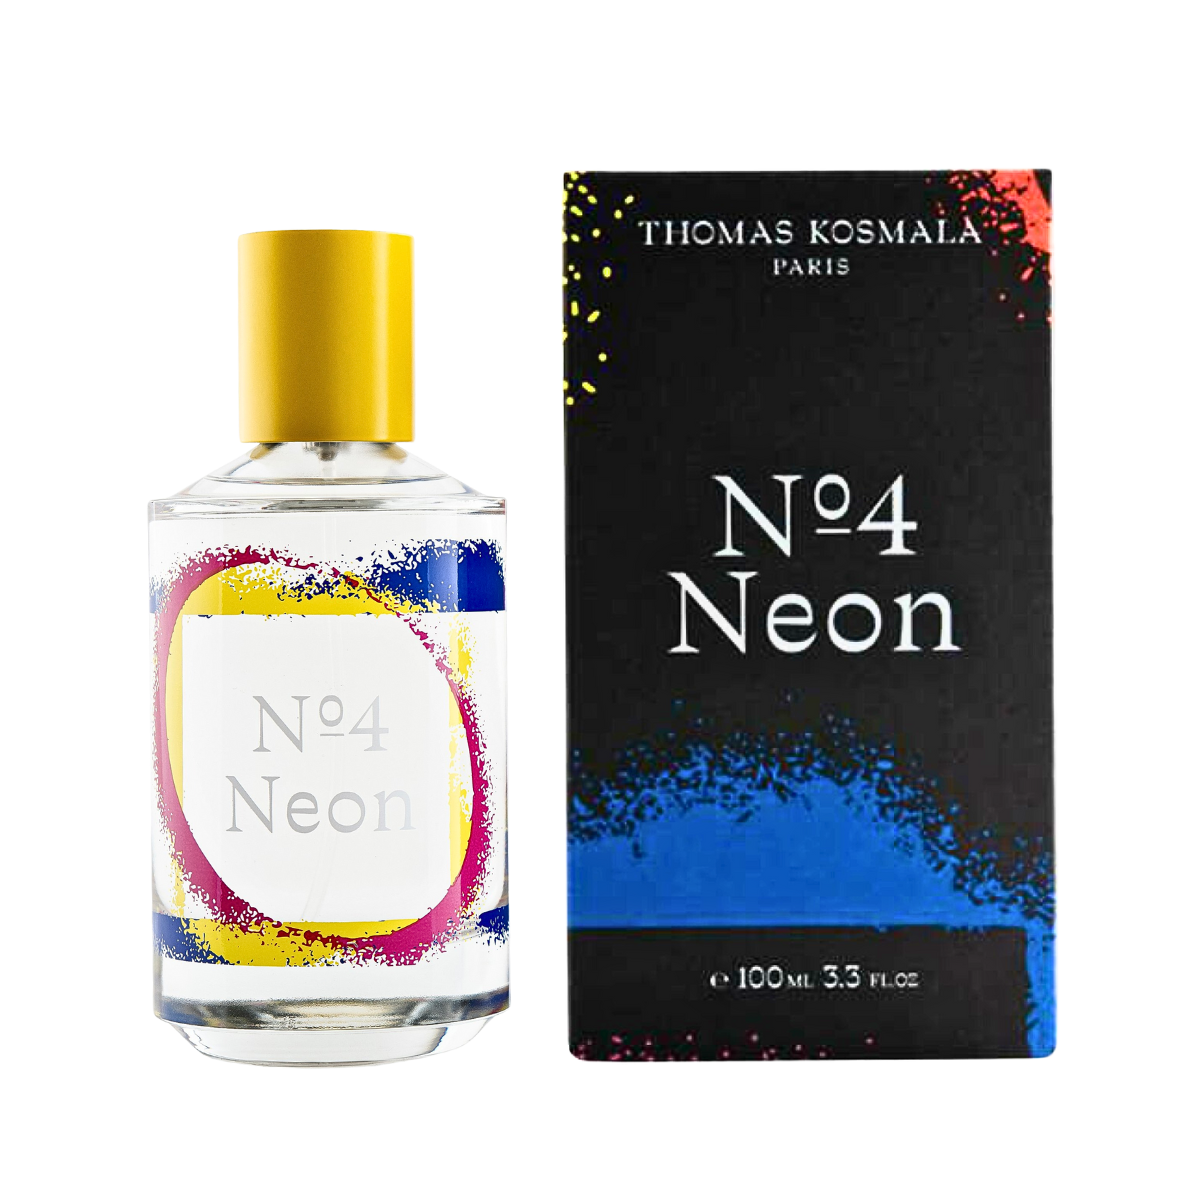 Thomas Kosmala No.4 Neon Edp 100Ml בושם תומס קוזמלה יוניסקס